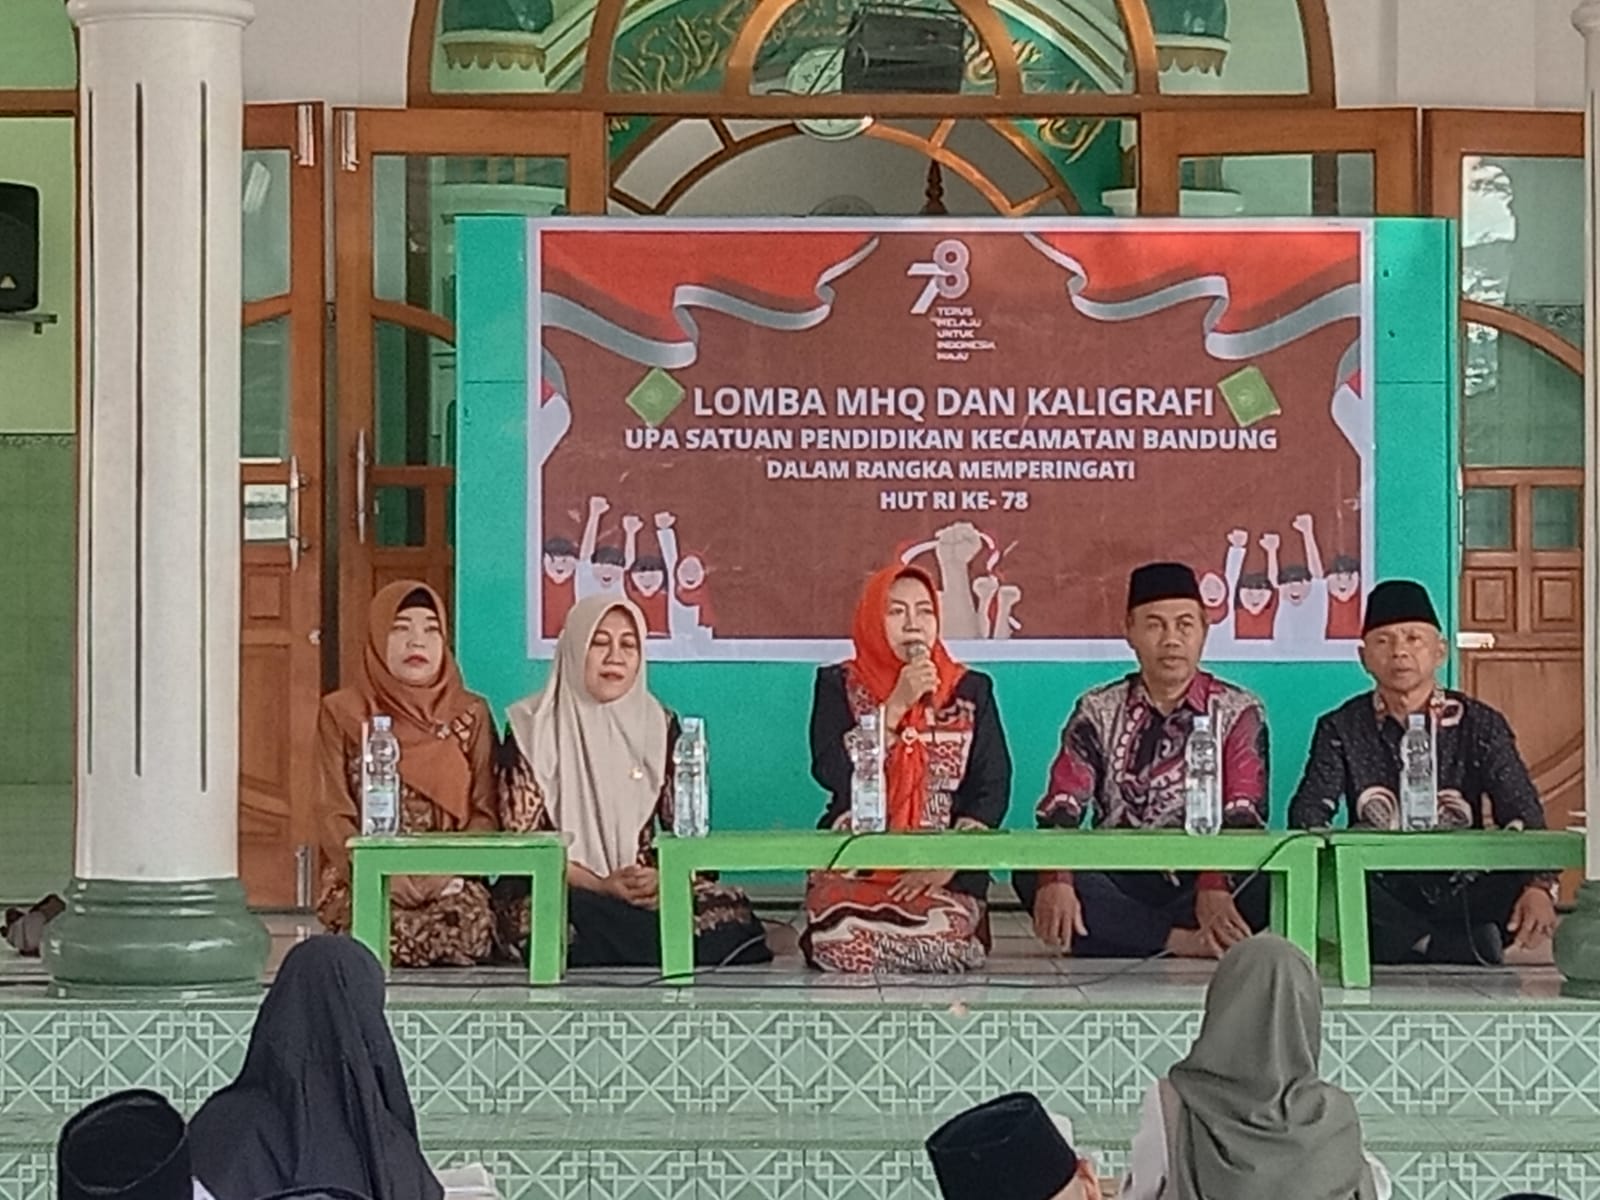 Buka Lomba MHQ Dan Kaligrafi,Ini Harapan Korwil UPASP Bandung Kabupaten Tulungagung.